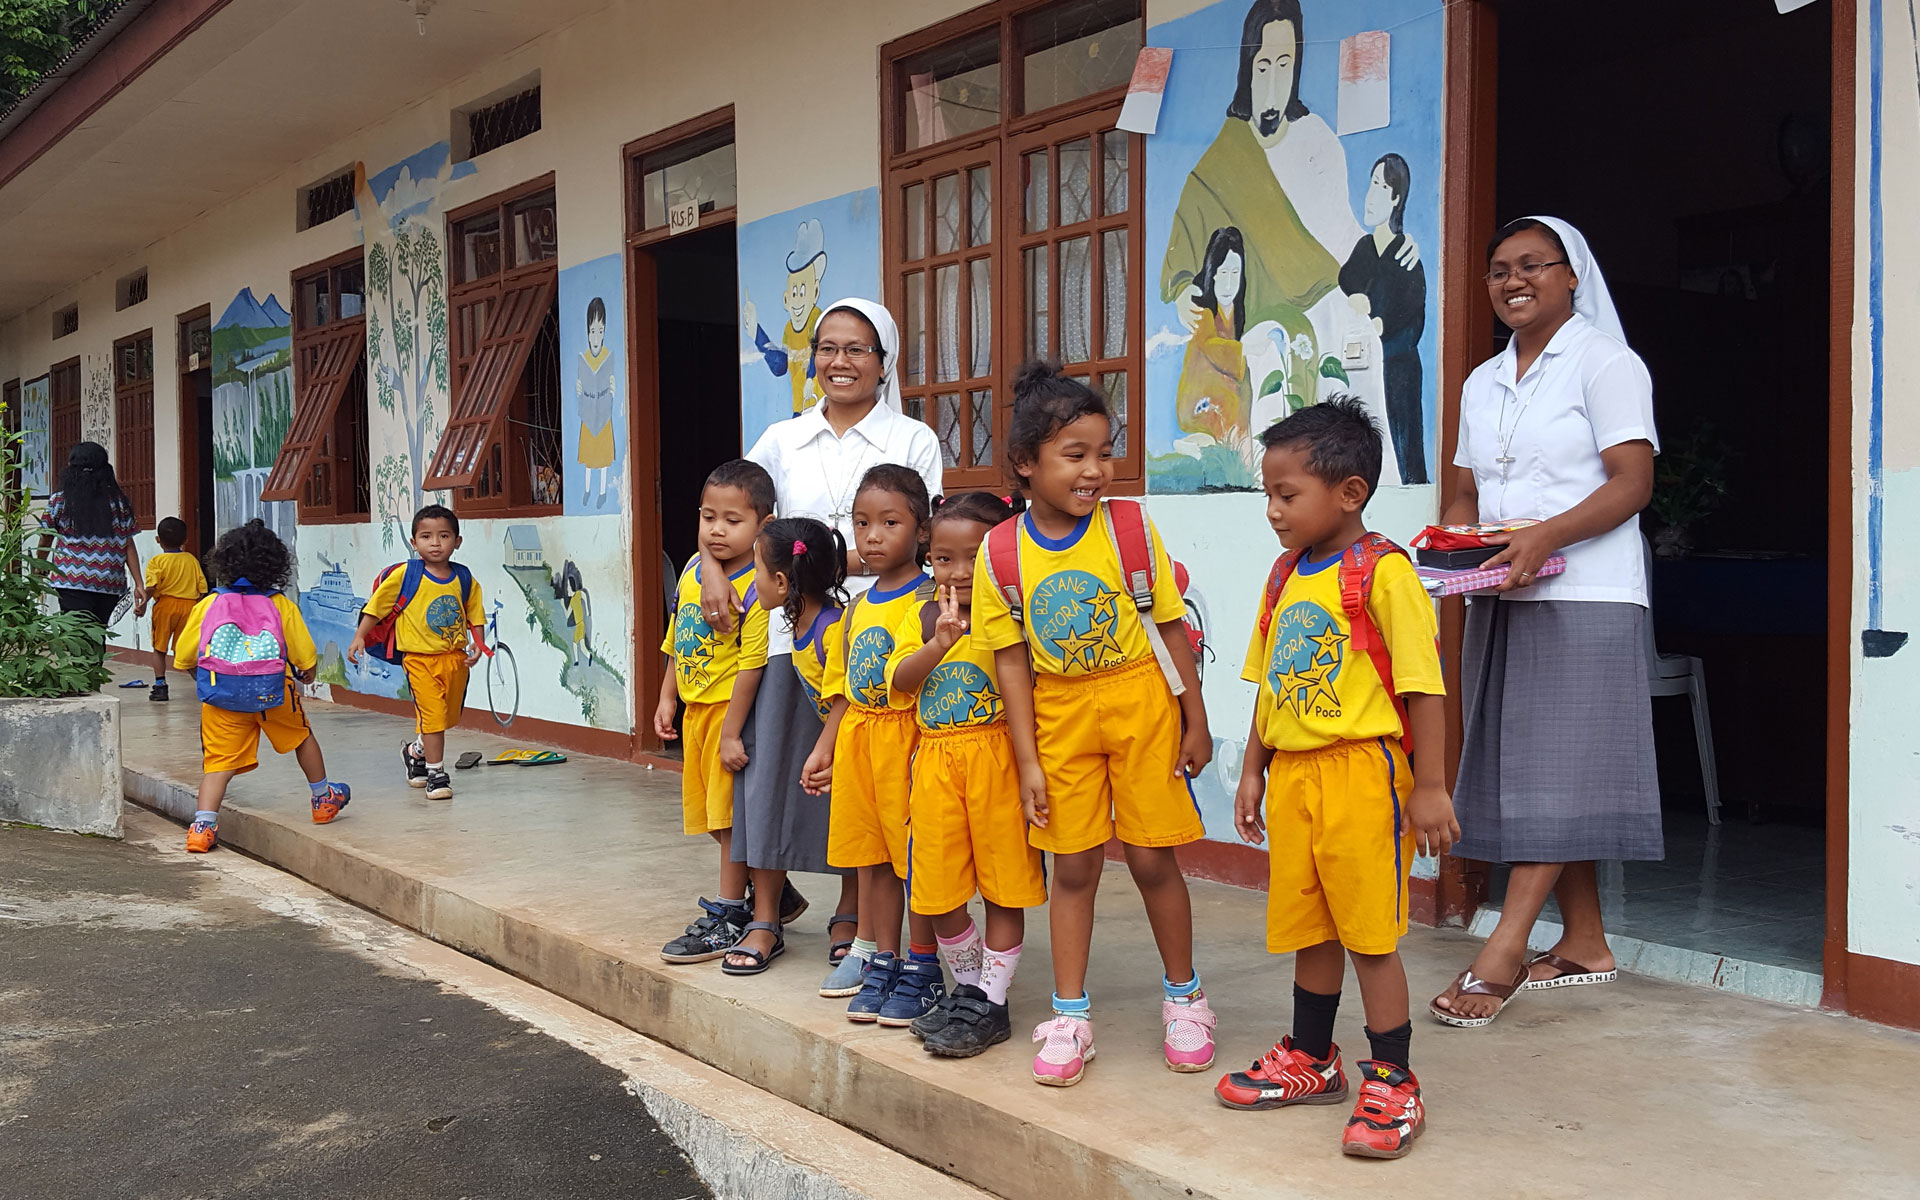 Small children standing in front of school